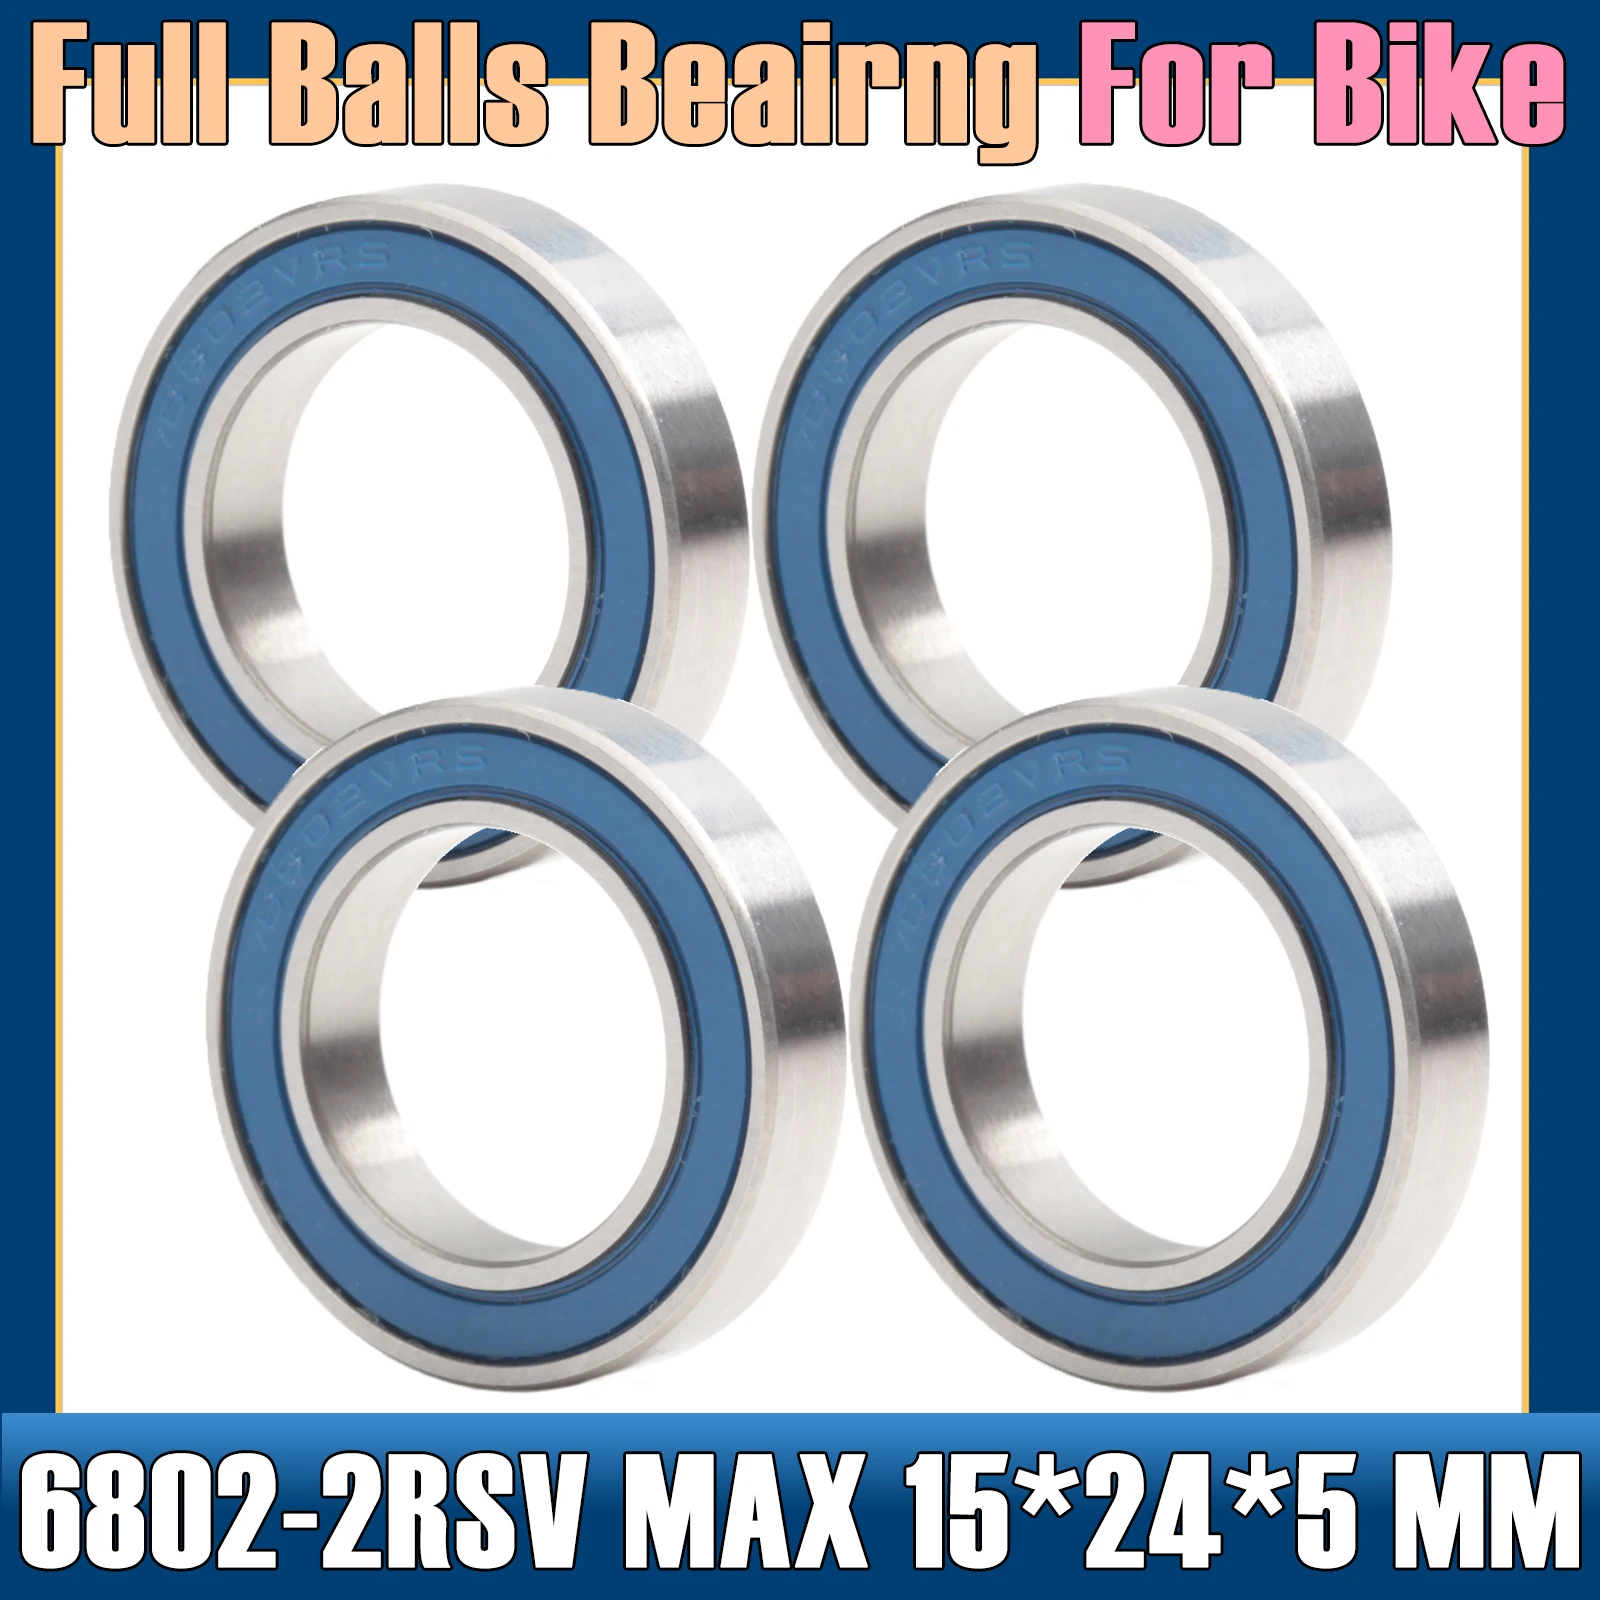 6802 VRS MAX Bearings 15*24*5mm ( 4 PCS ) Bike Pivot Chrome Steel Blue Sealed with Grease 6802LLU Cart Full Balls Bearing